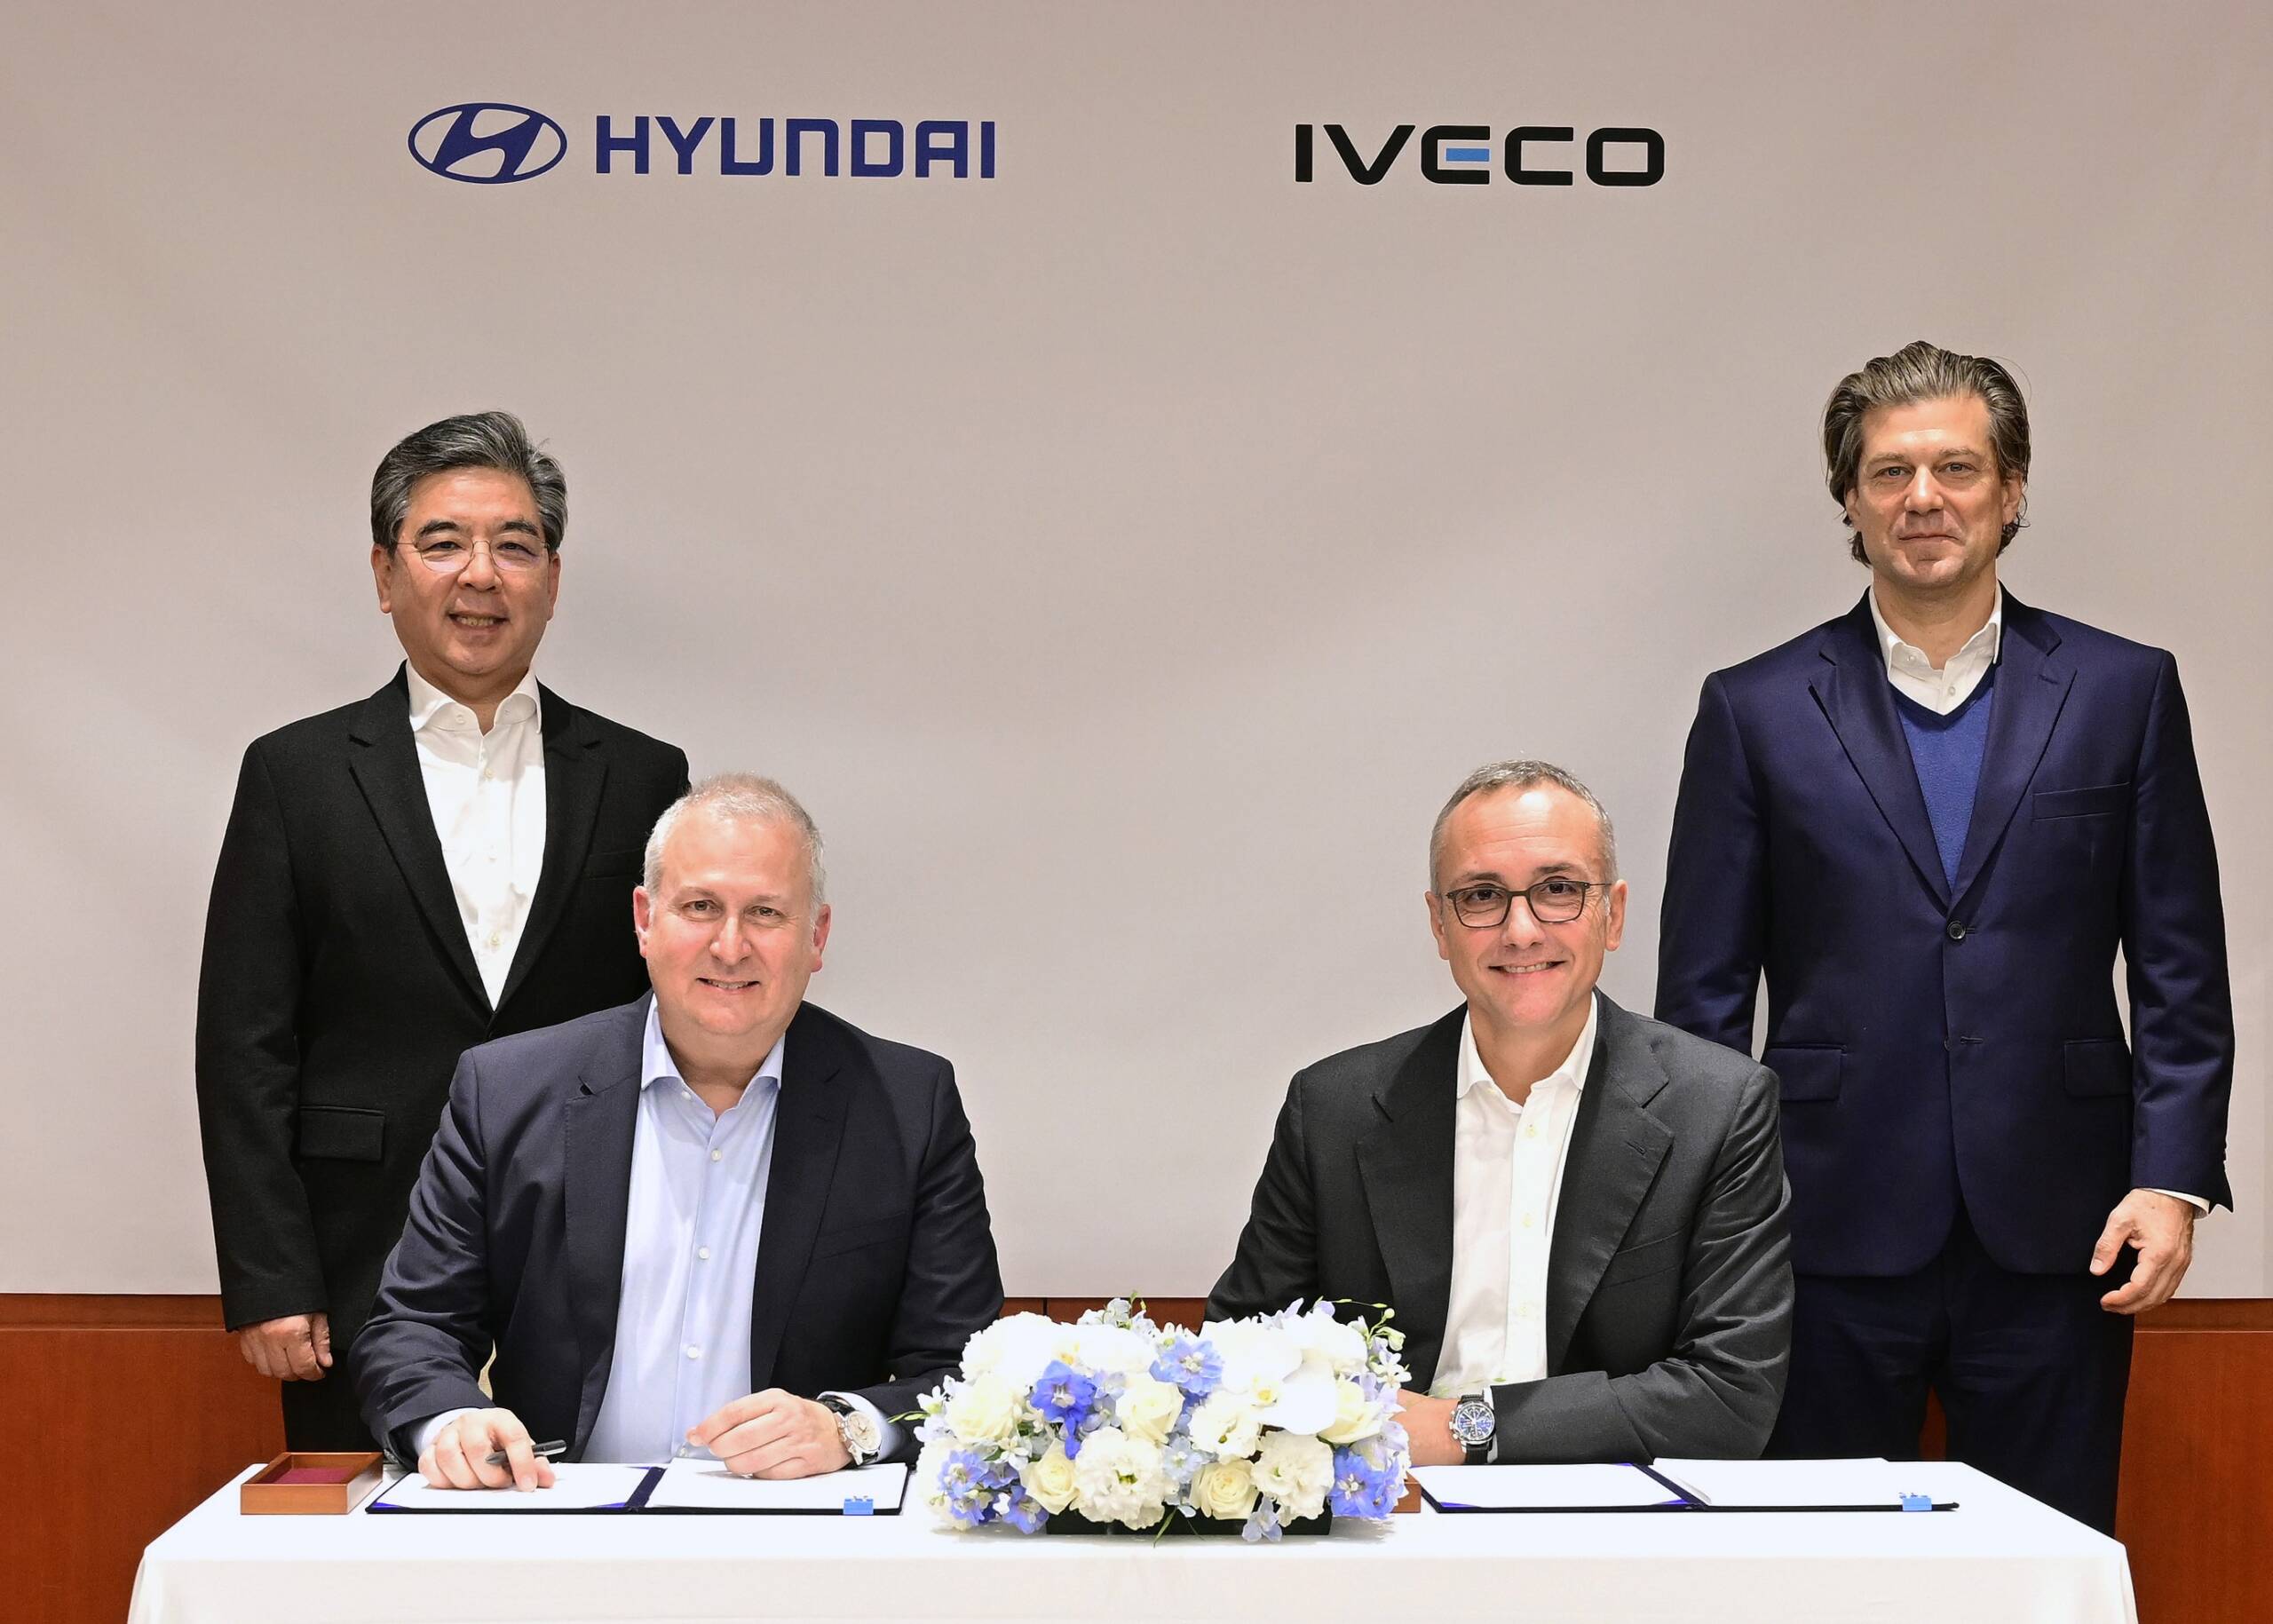 IVECO ve Hyundai